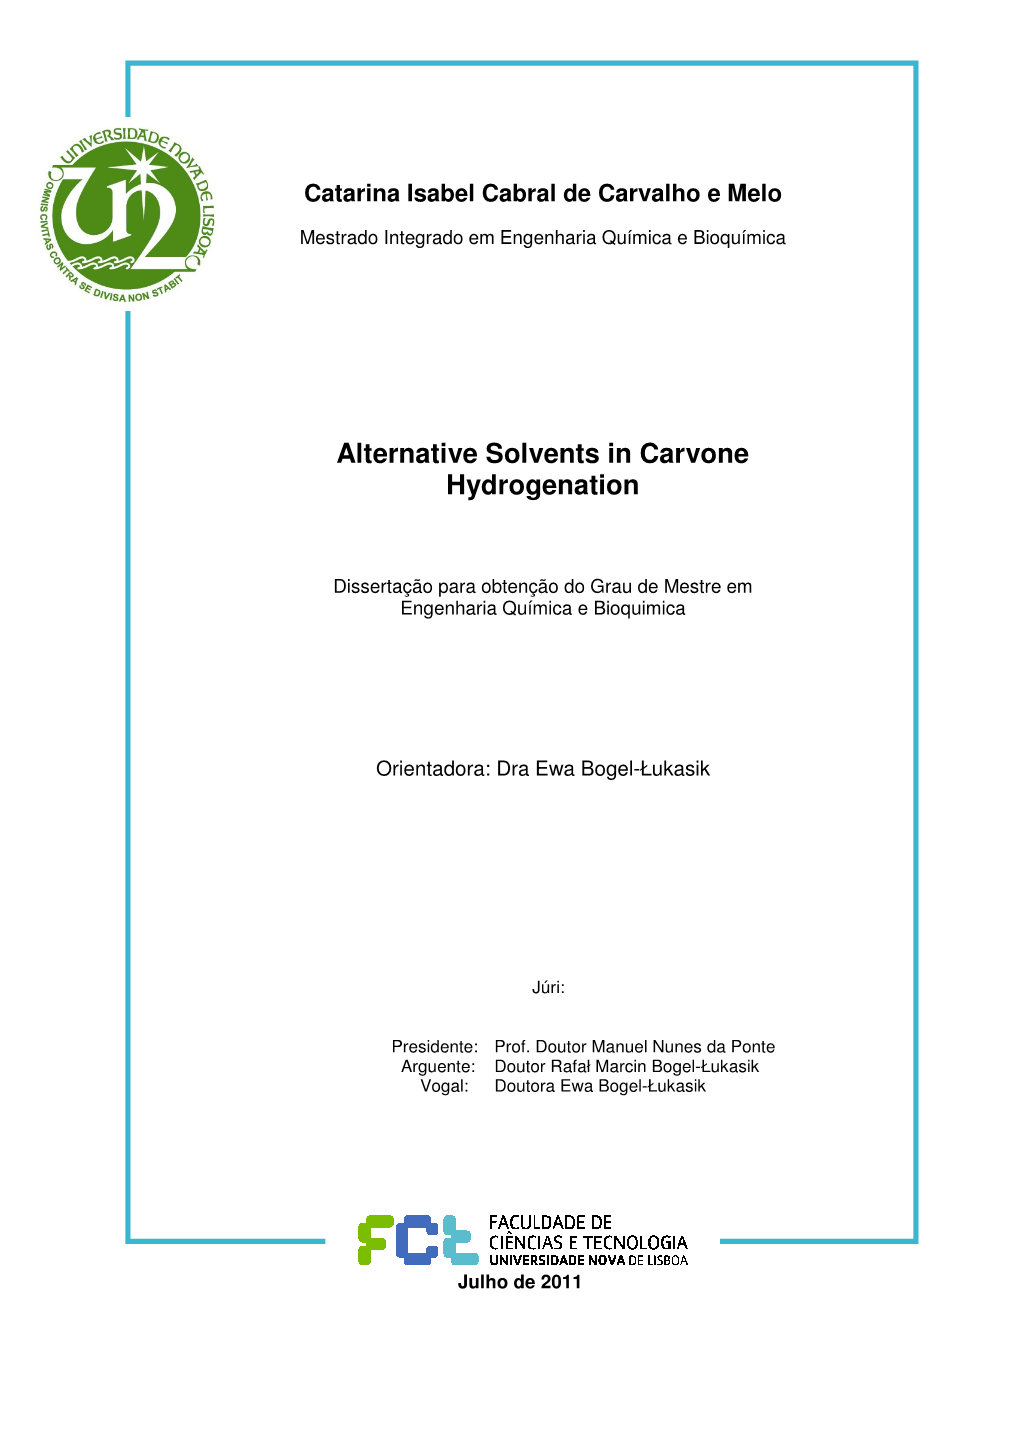 Alternative Solvents in Carvone Hydrogenation